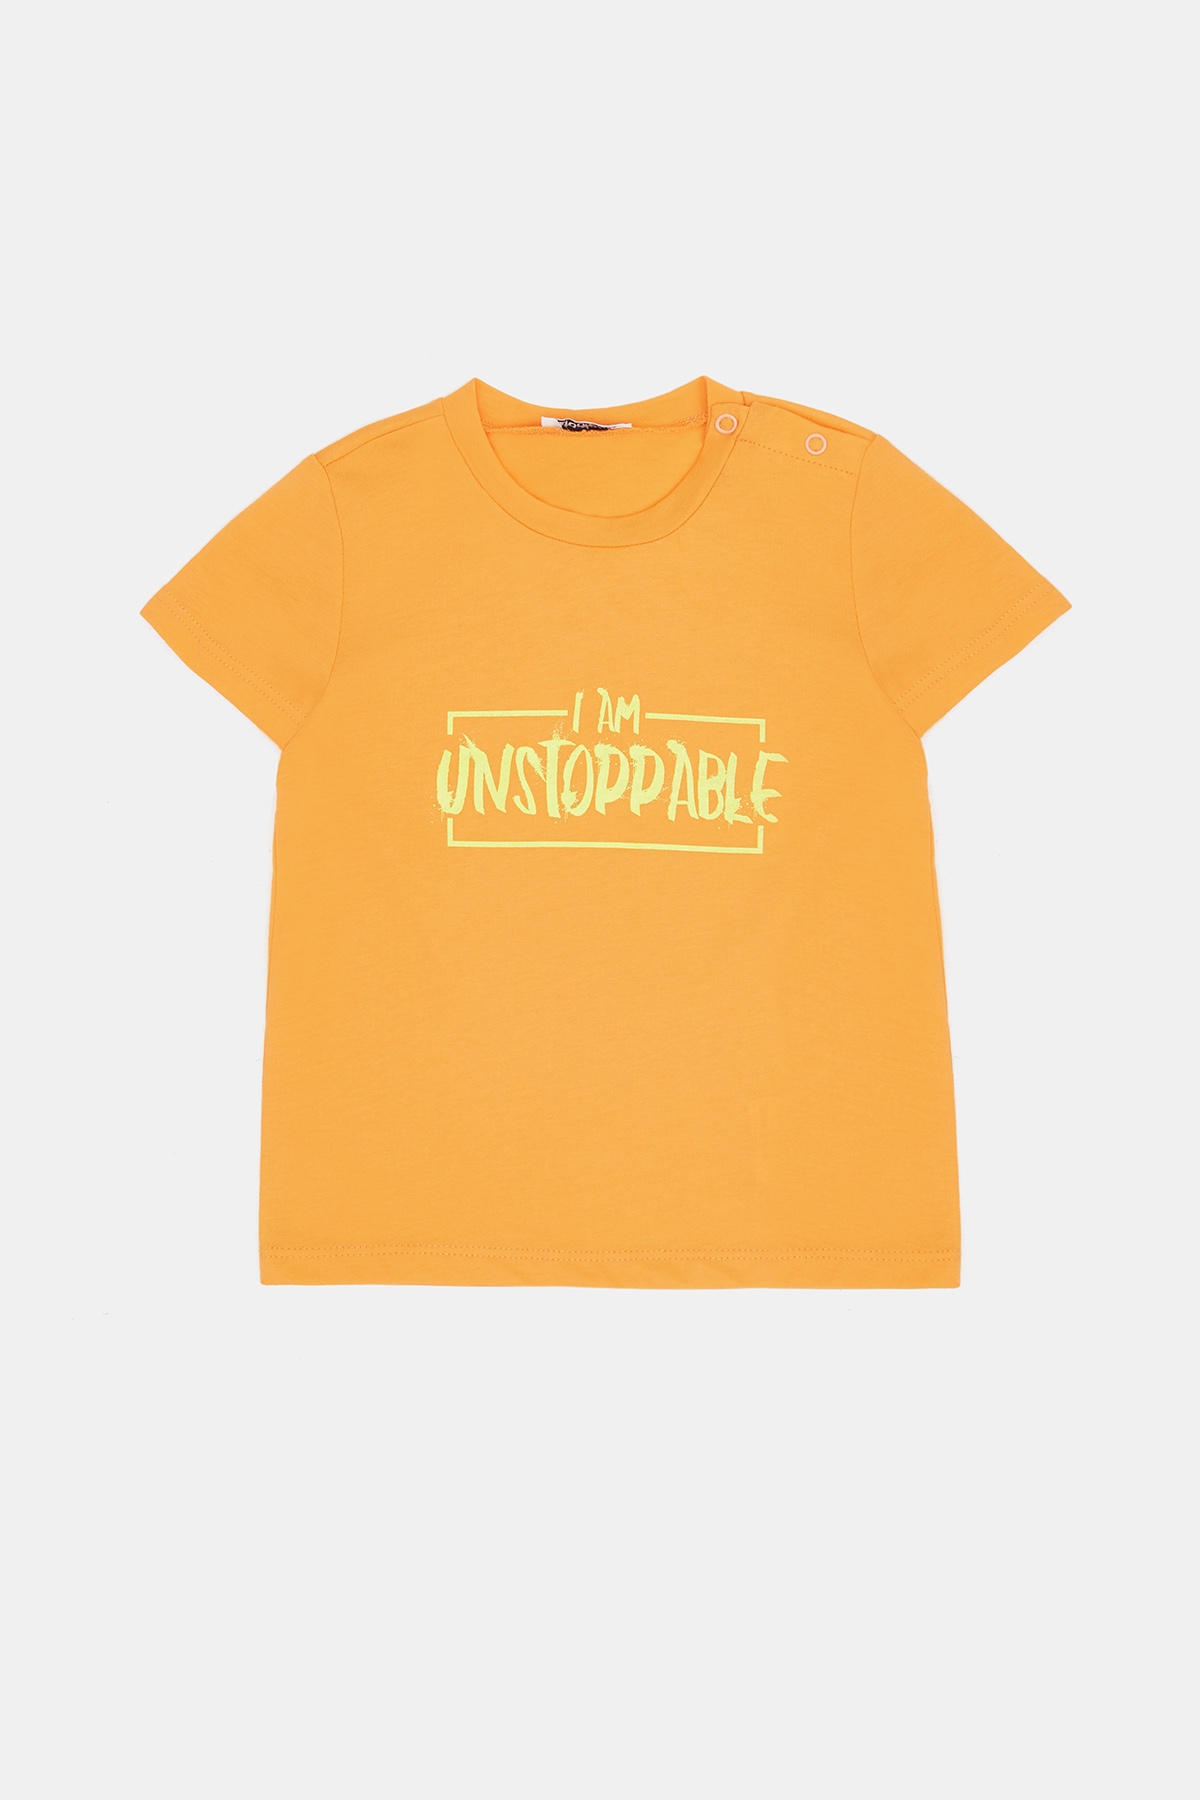 Erkek Bebek Oranj T-Shirt